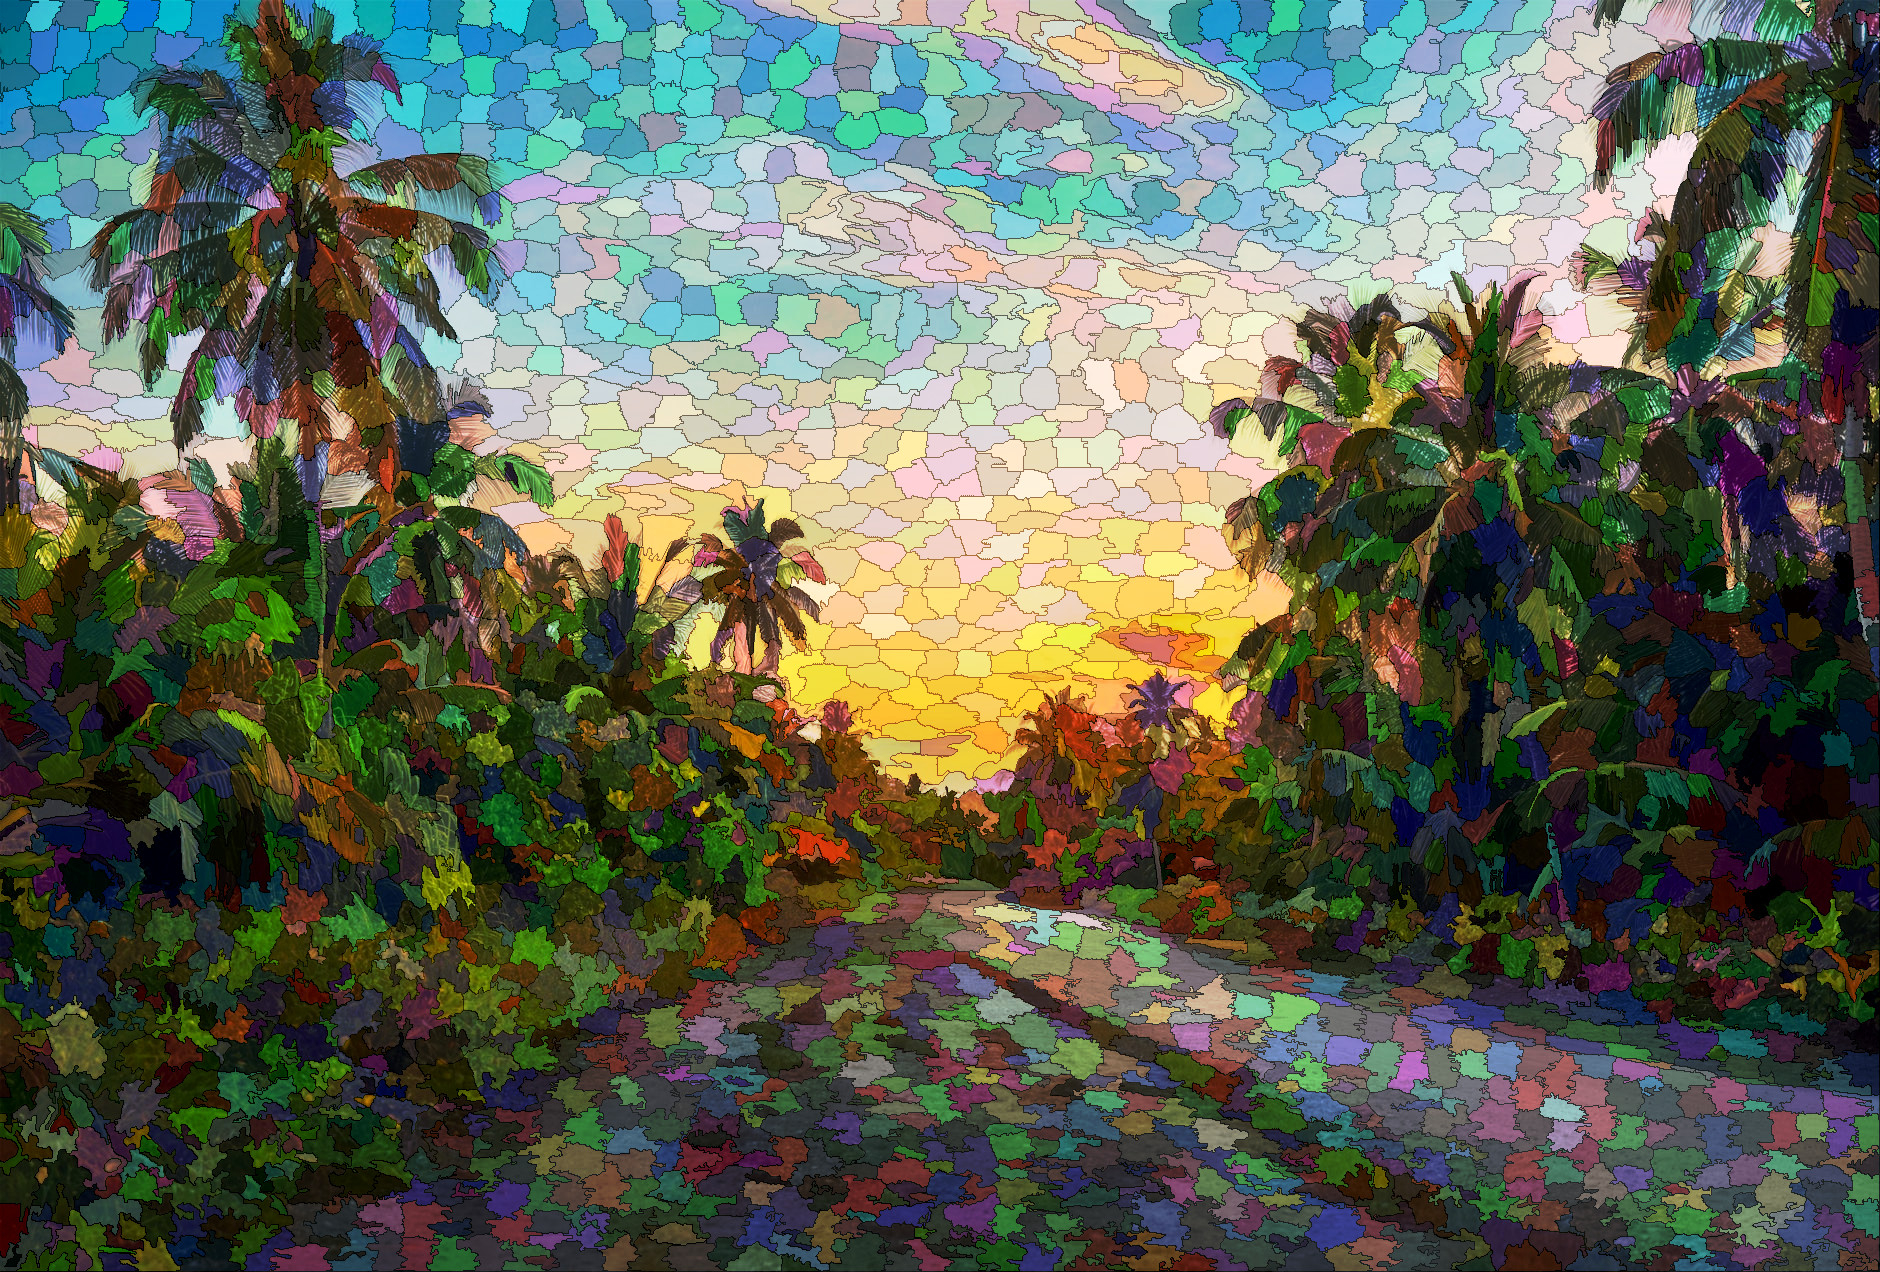 2020-02-04 15-53-42pexels-photo-1033729 with a vivid mosaic effect.jpg